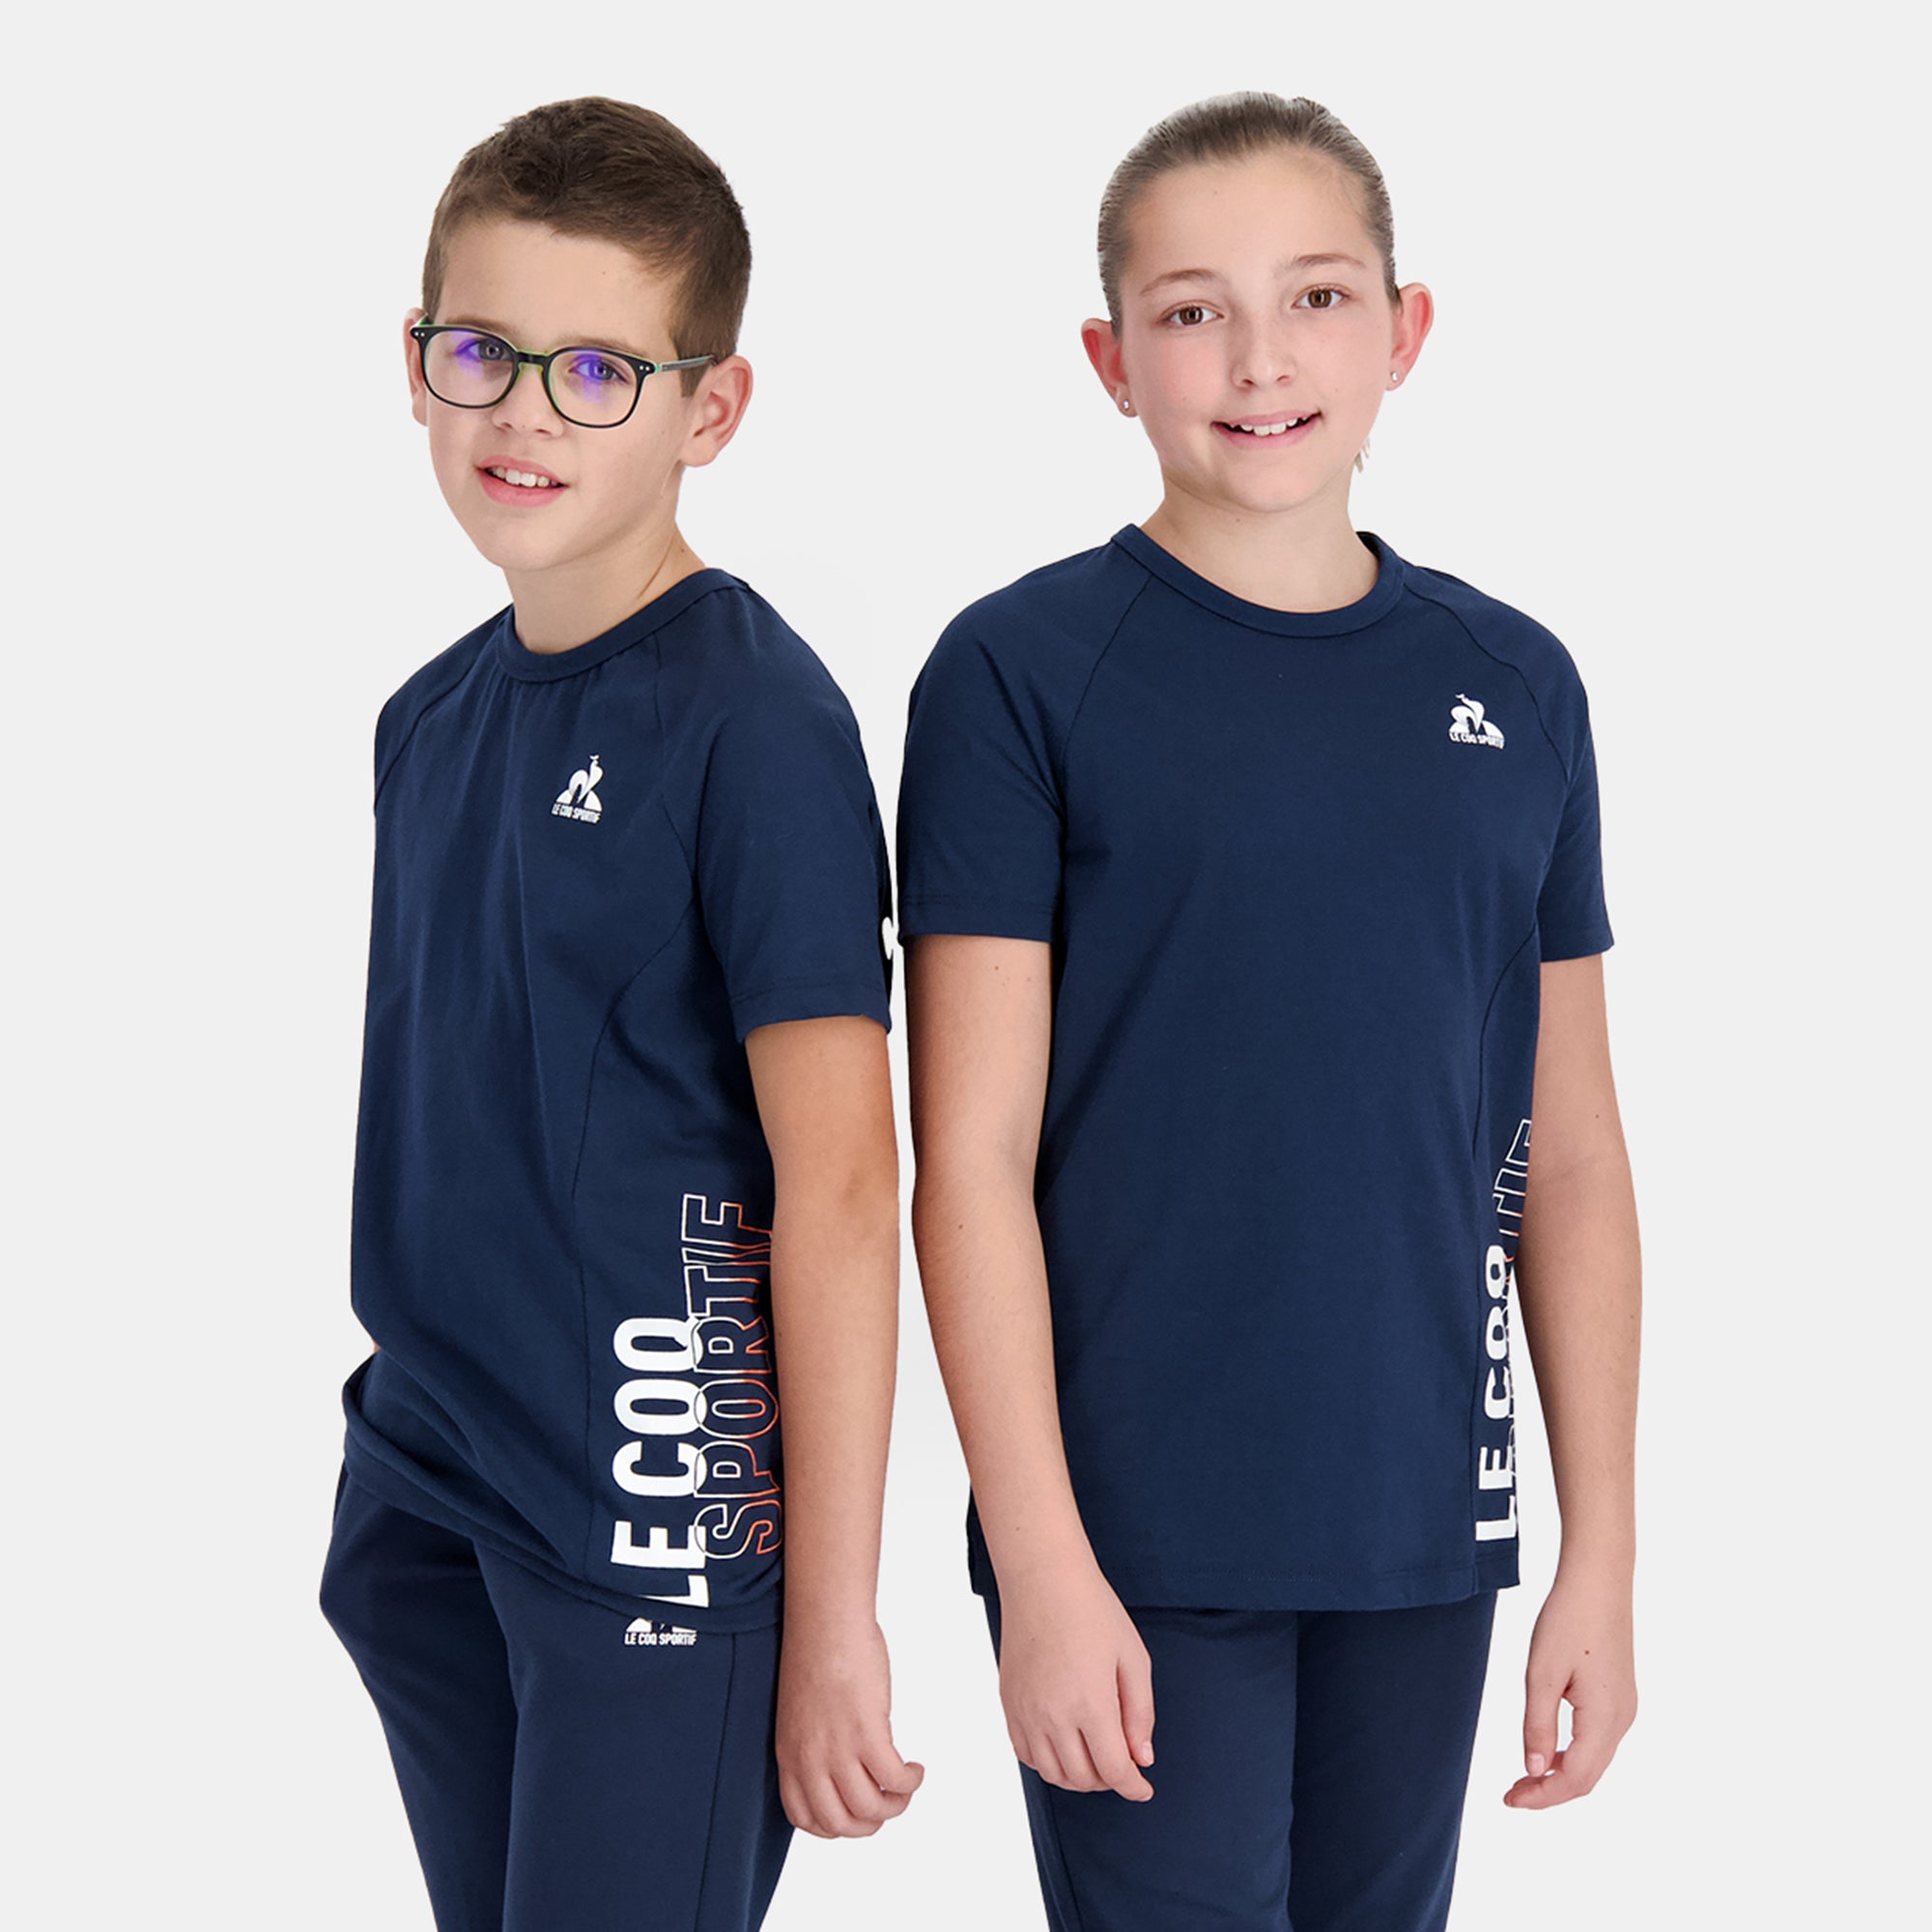 2410125-SAISON 2 Tee SS N°1 Enfant dress blues  | T-Shirt für Kinder